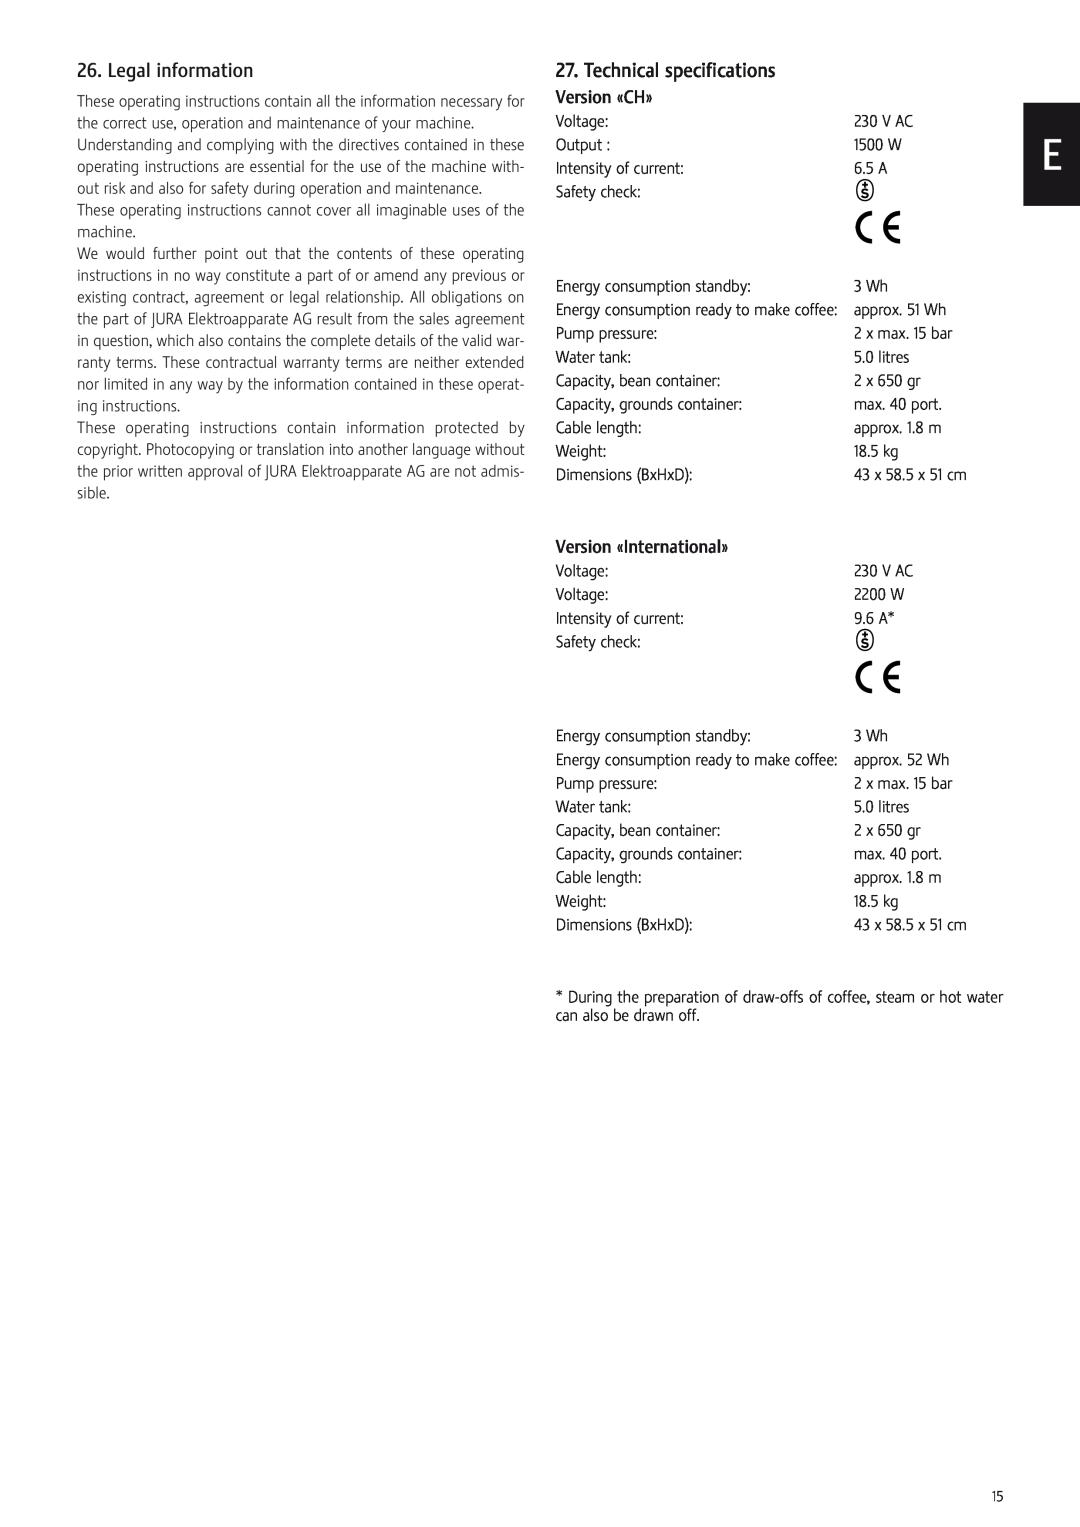 Jura Capresso X7-S manual Legal information, Technical specifications, Version «CH», Version «International» 